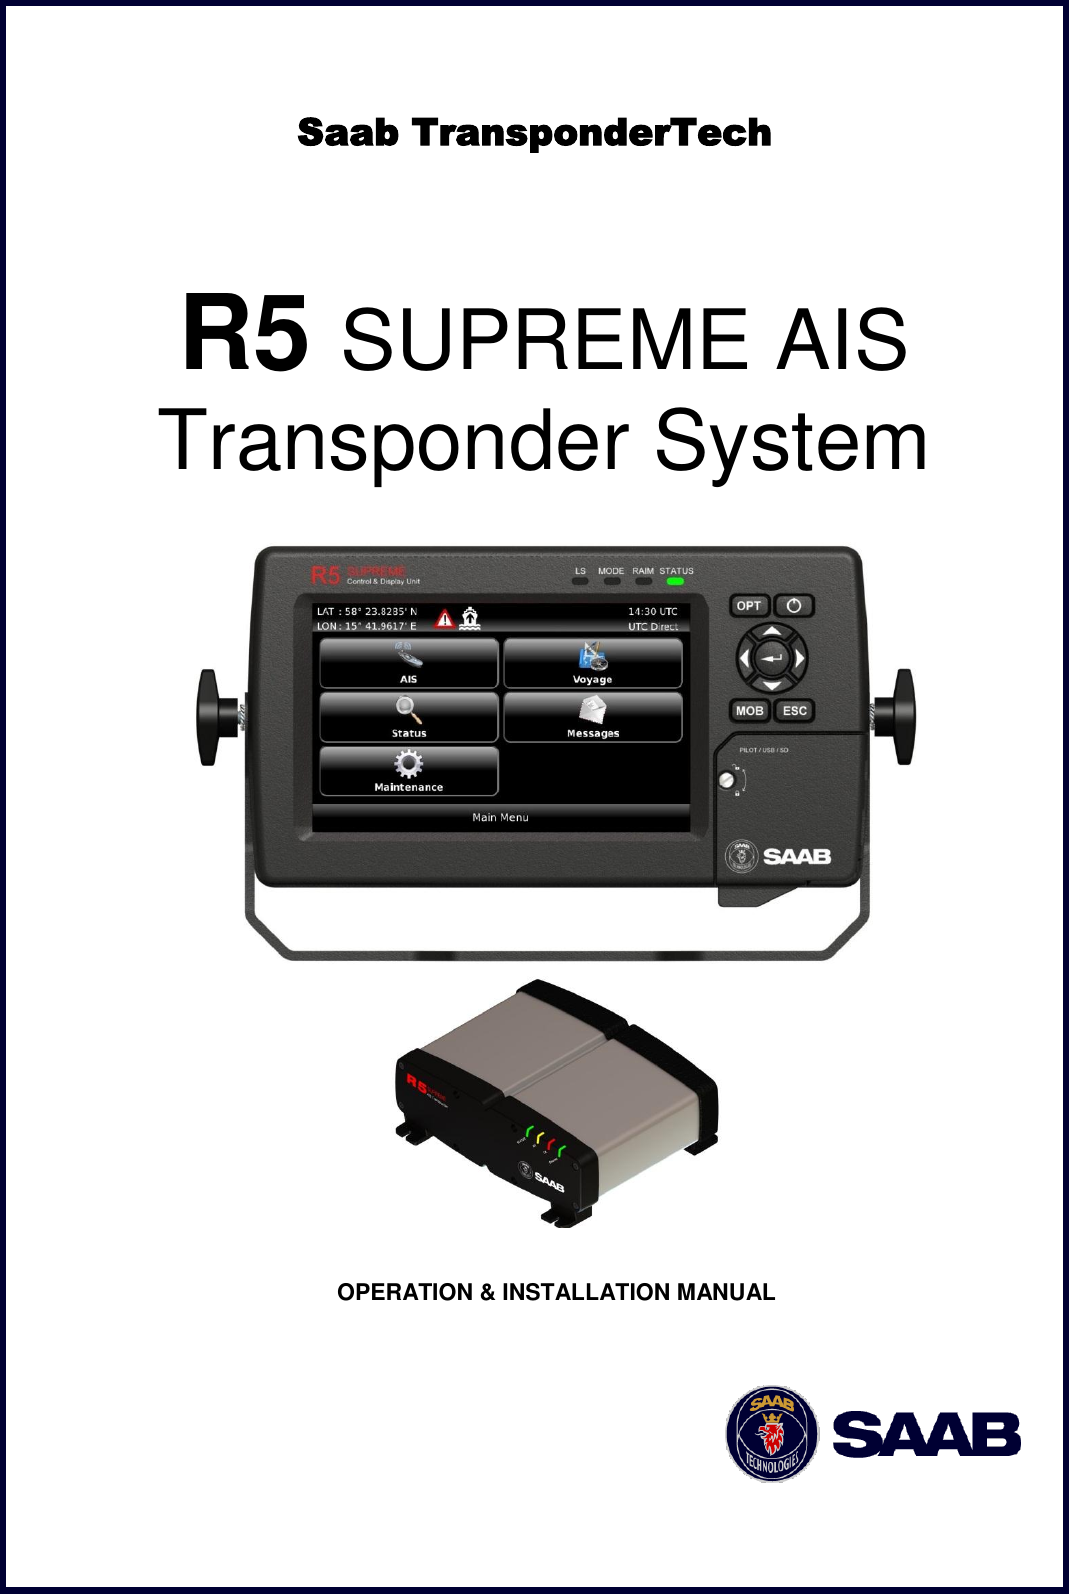                   OPERATION &amp; INSTALLATION MANUAL     Saab TransponderTech R5 SUPREME AIS Transponder System 